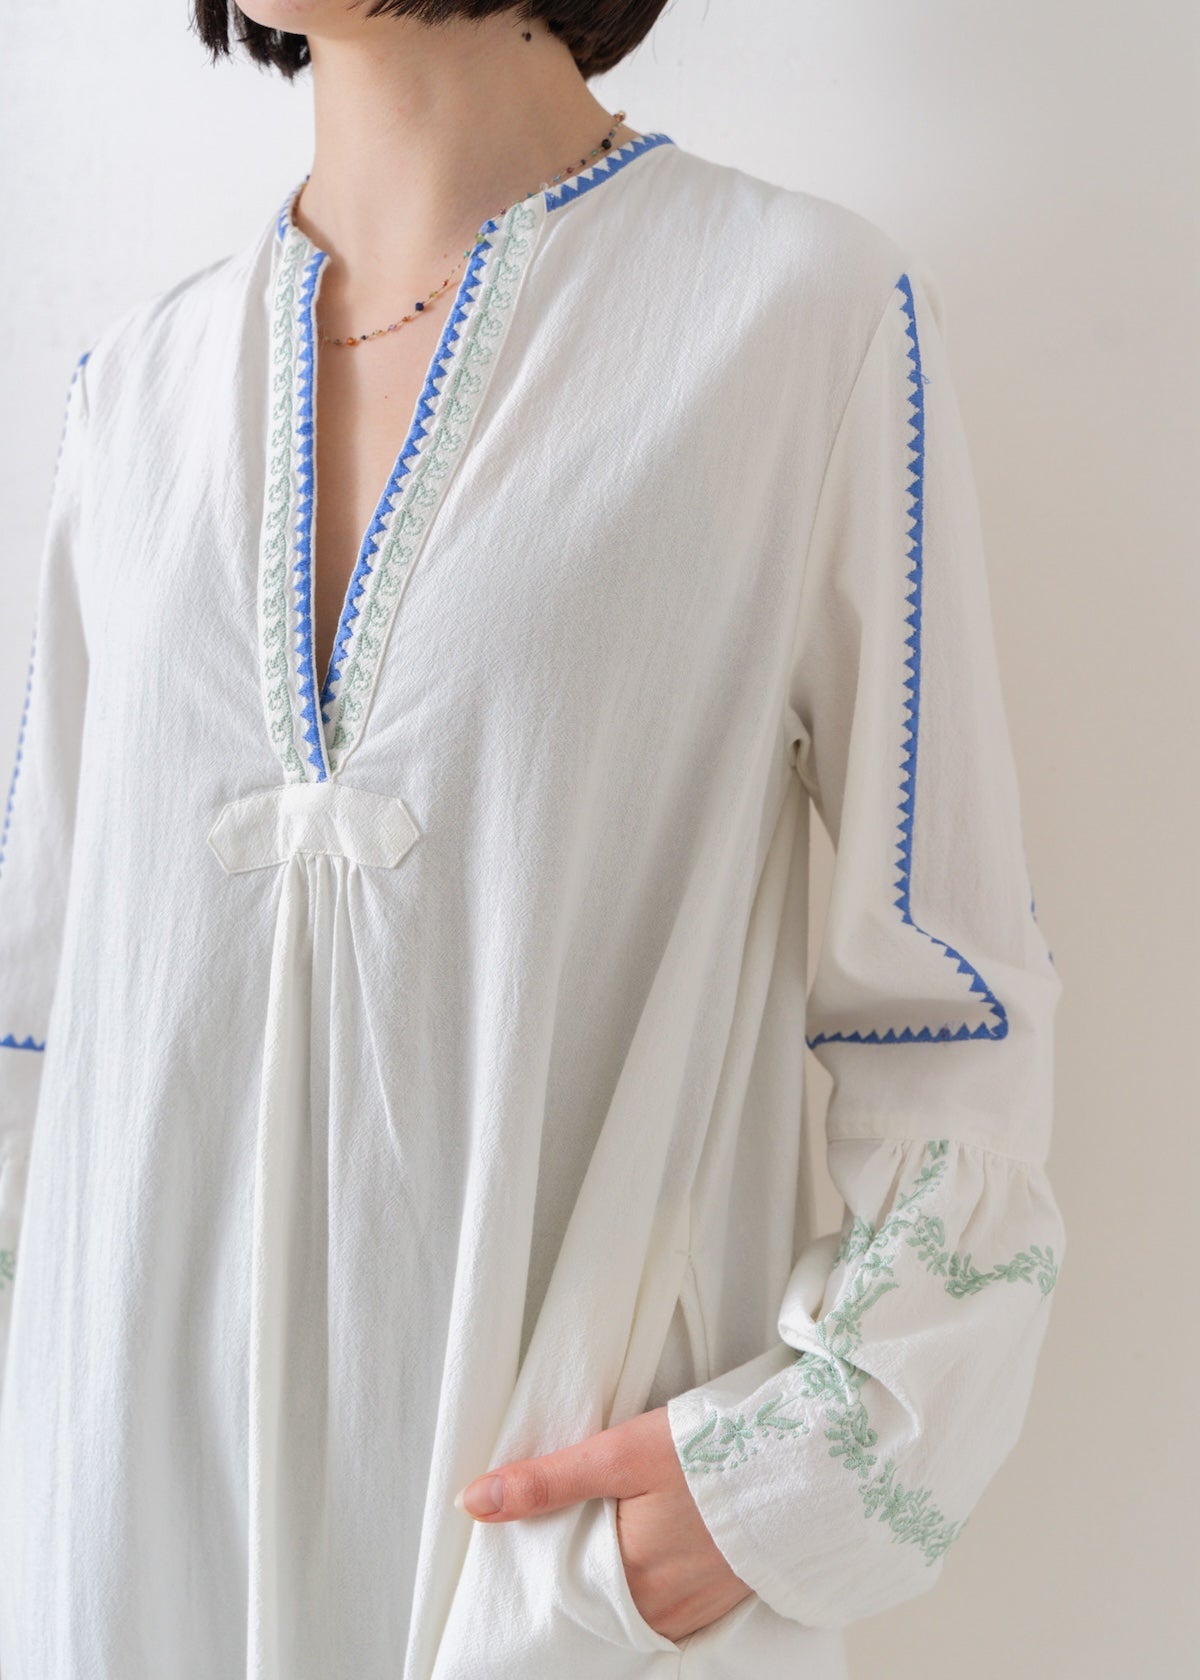 Crimp Cotton Check Embroidery Flare Cuff Dress | Pasand by ne